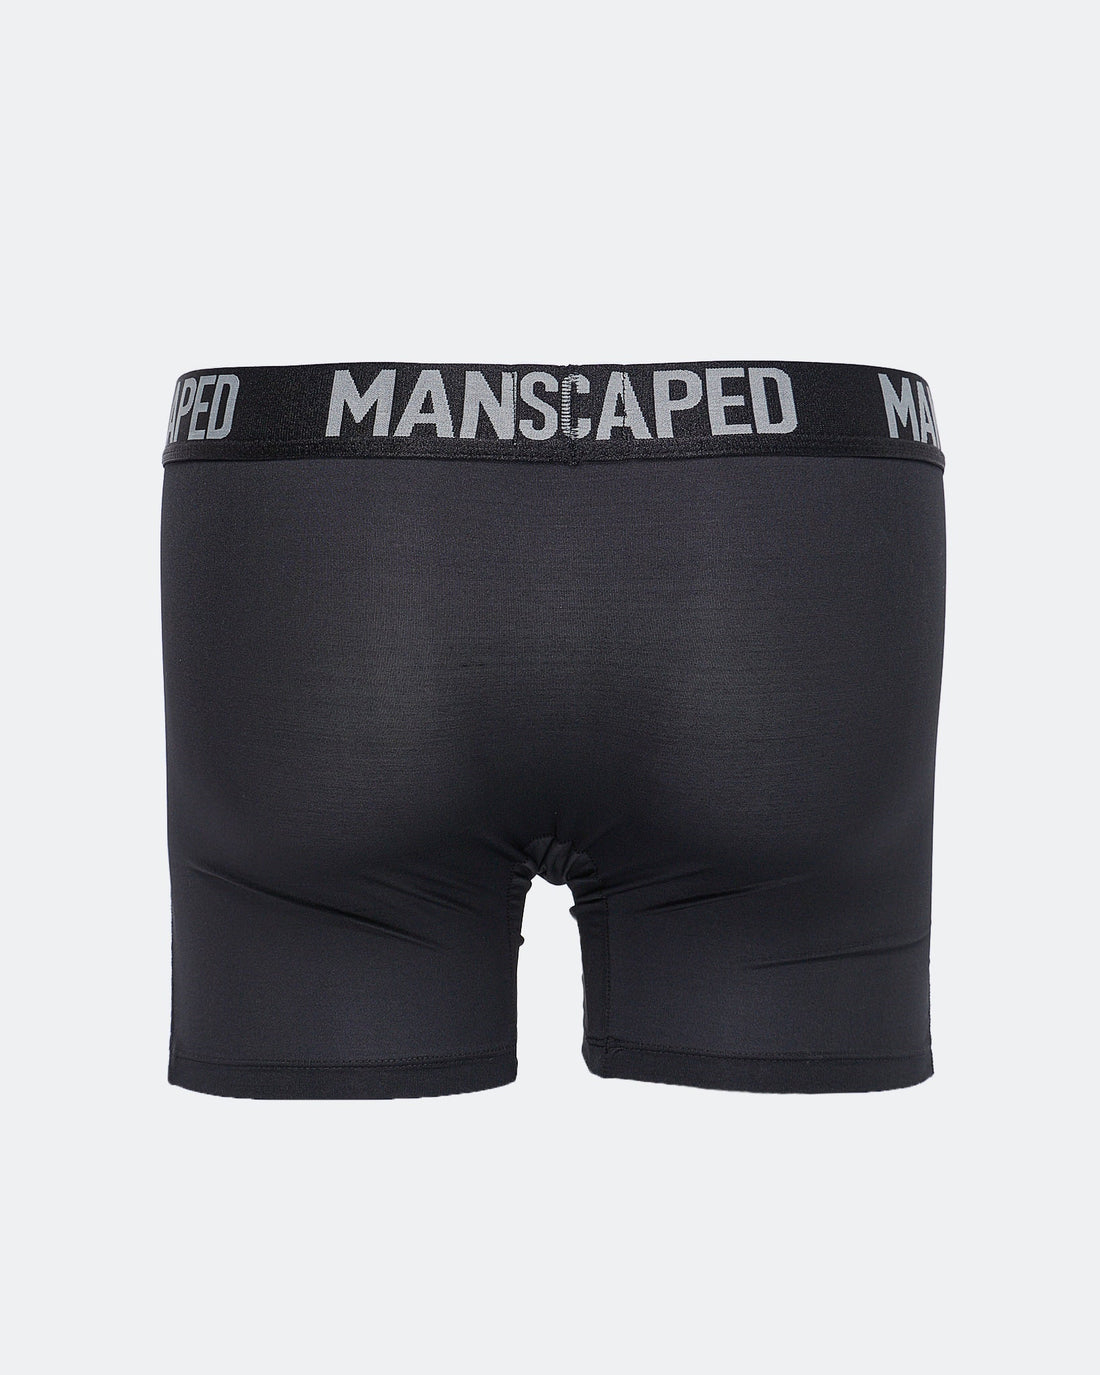 MOI OUTFIT-Logo Printed Men Underwear 6.90